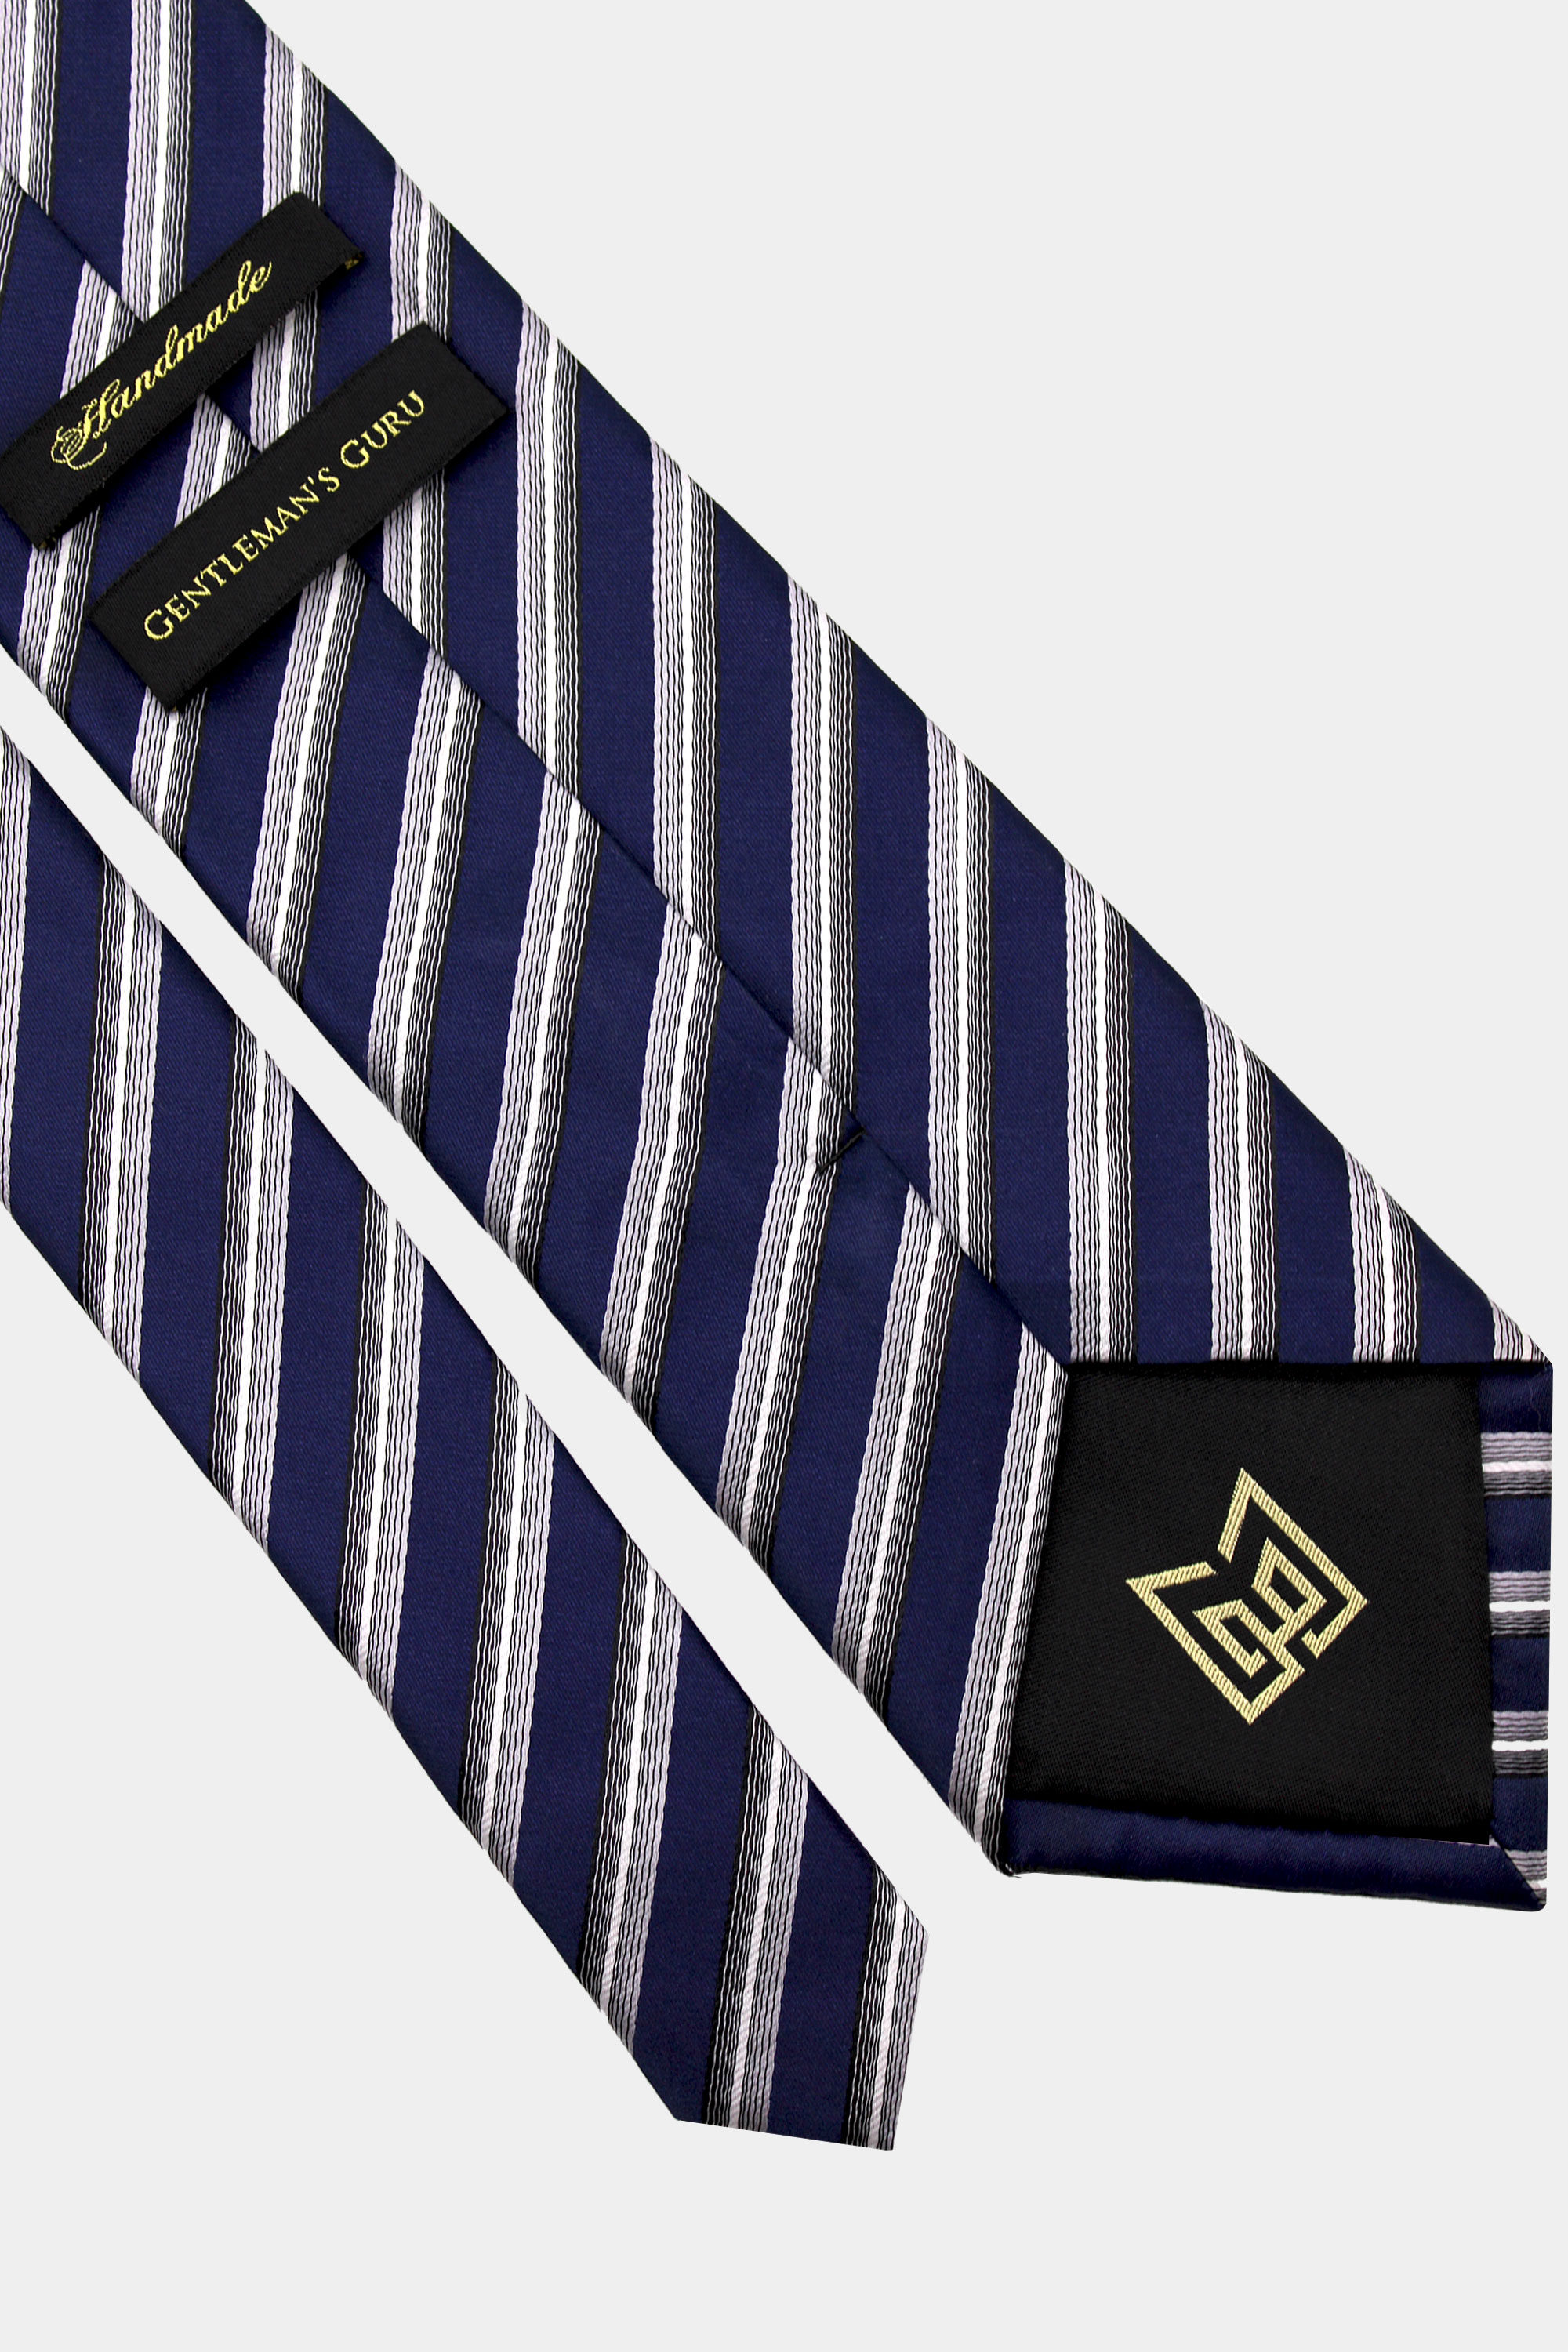 Grey-and-Navy-Blue-Striped-Tie-from-Gentlemansguru.com